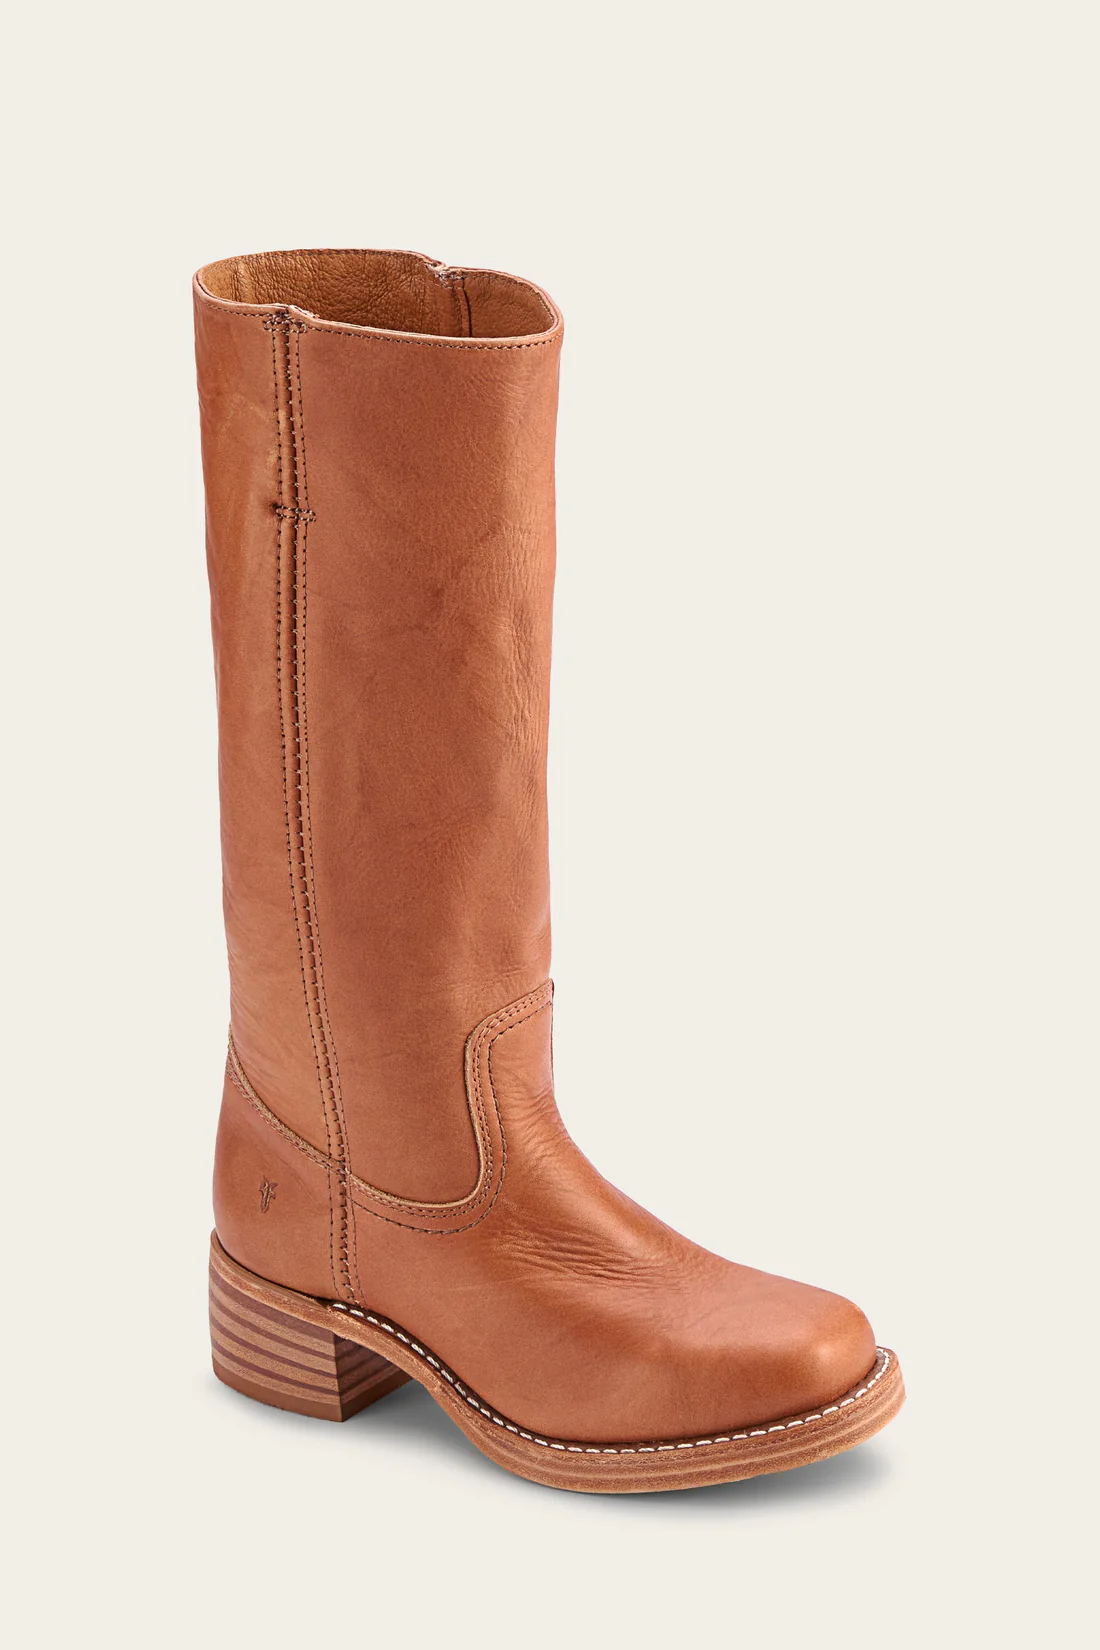 Frye Campus Leather Boot - Saddle profile